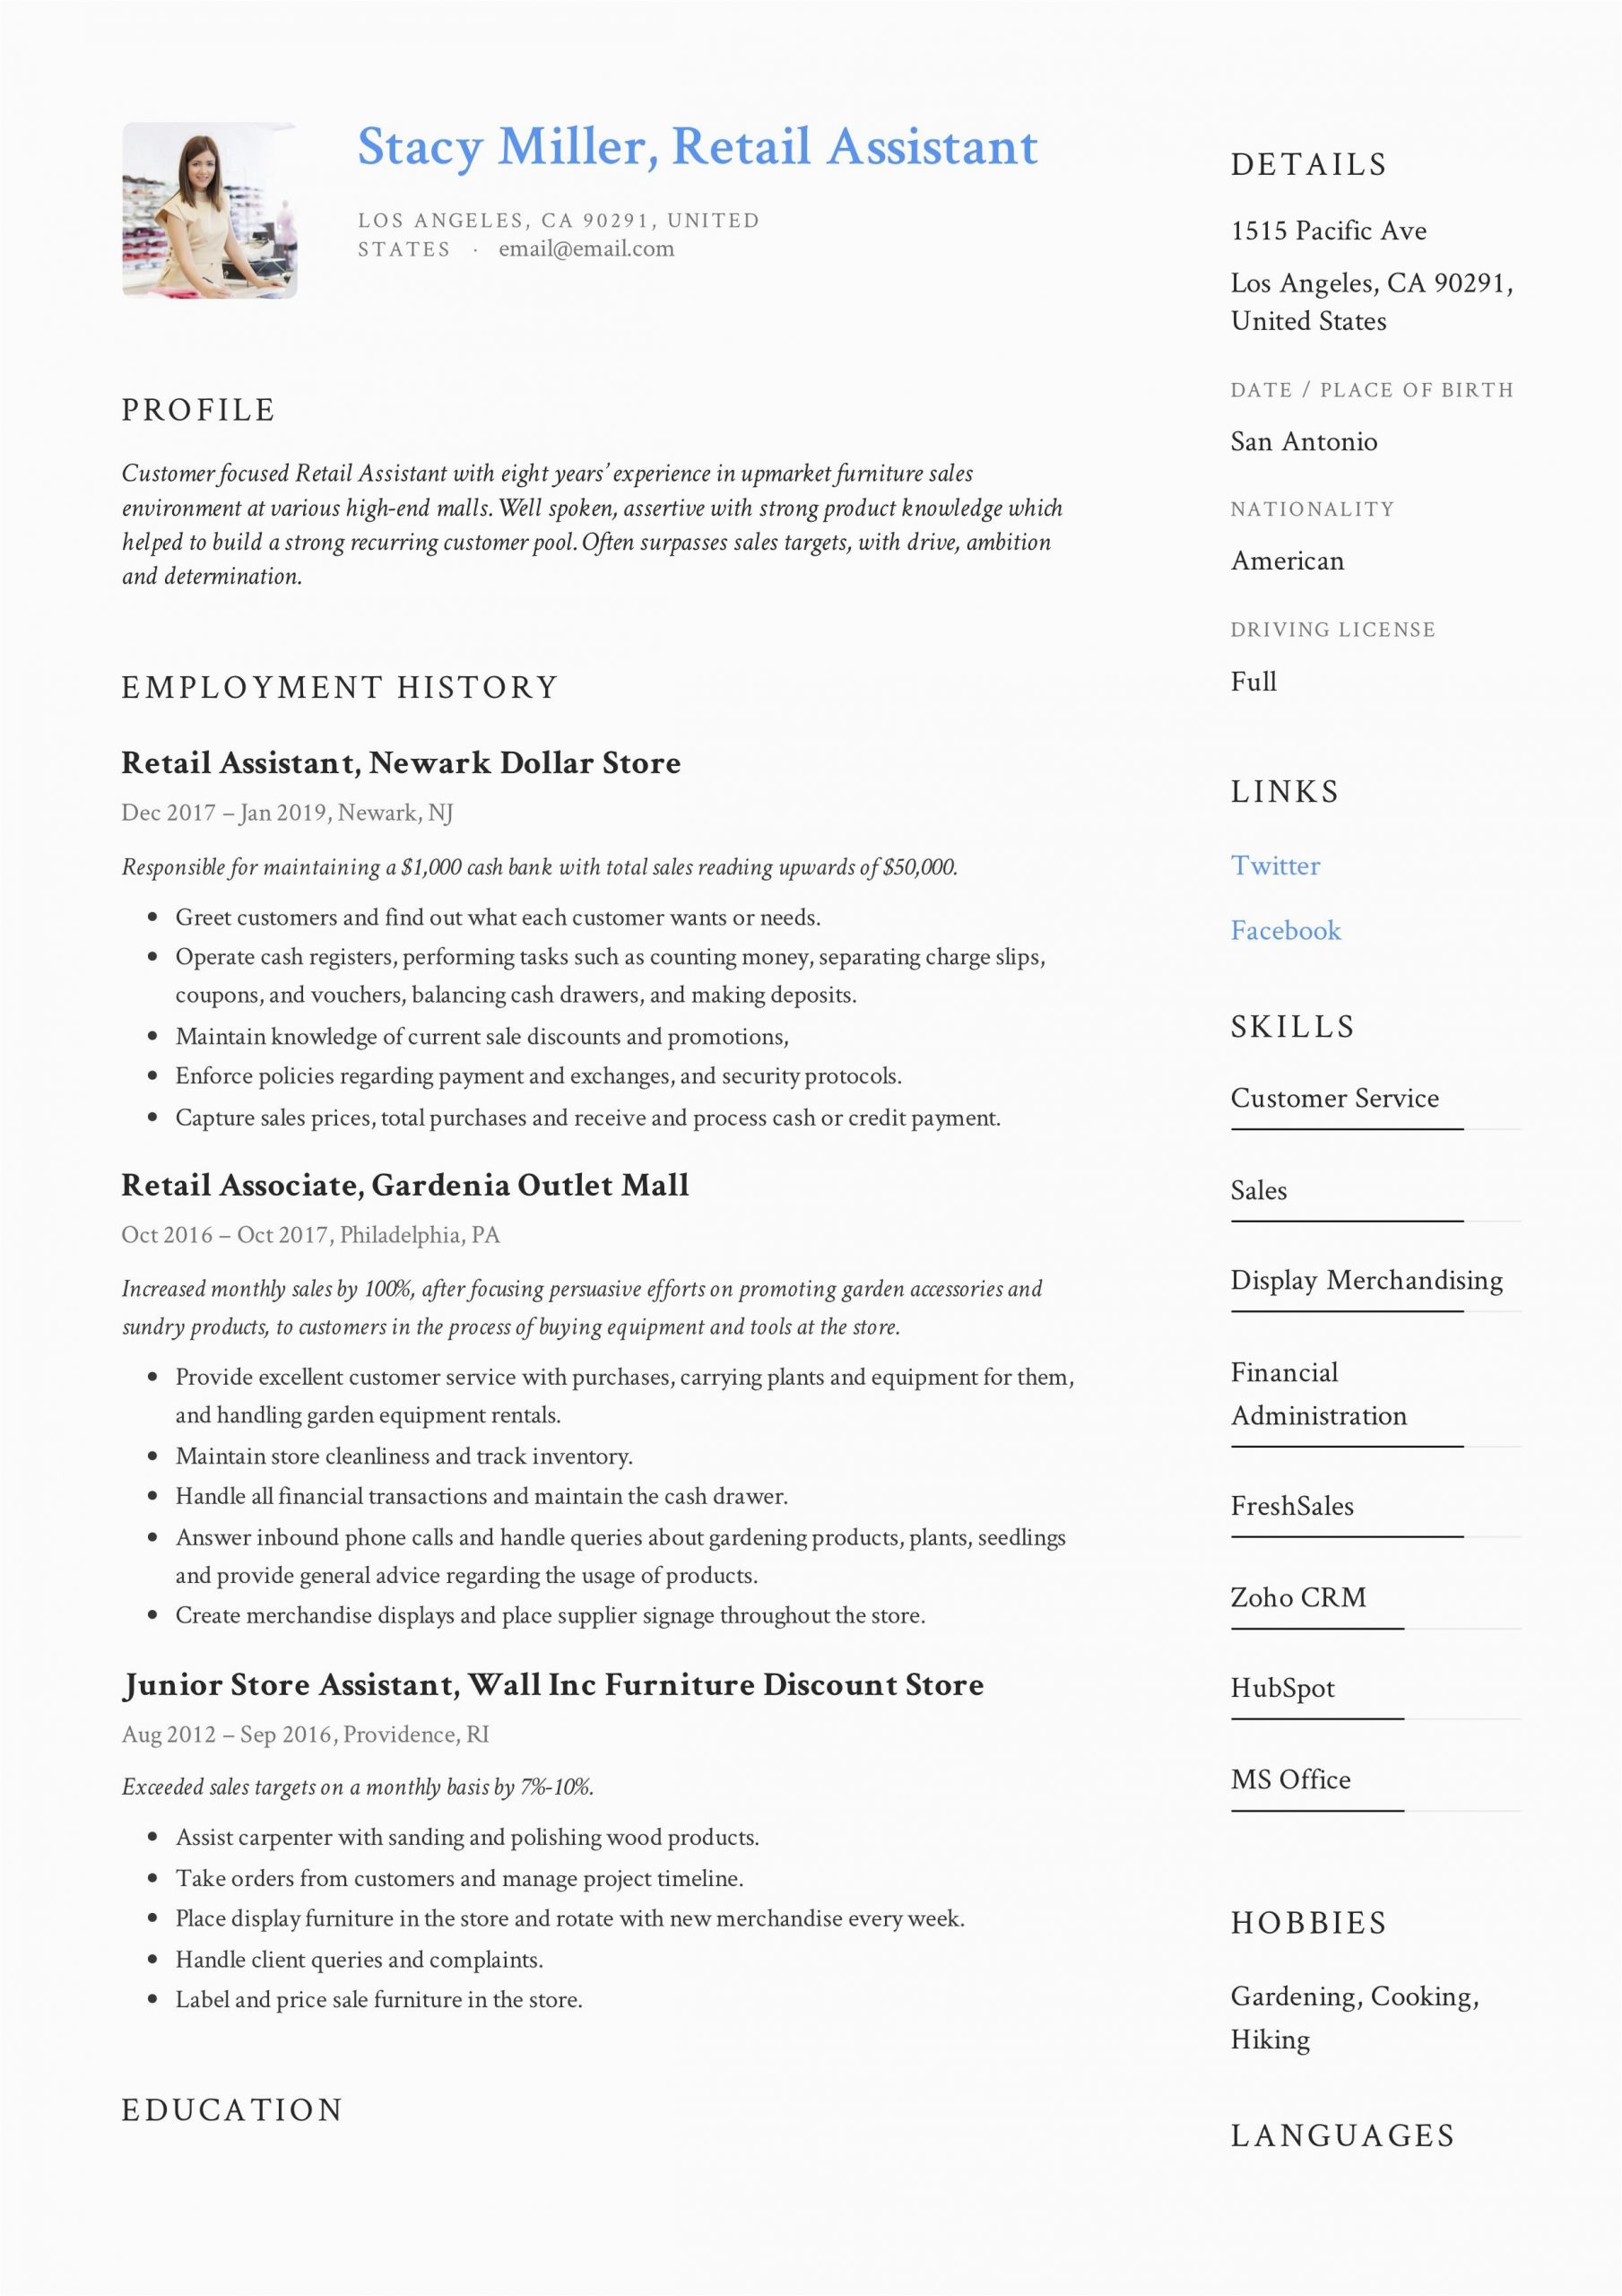 Sample Resume for Aldi Retail assistant Modern Retail assistant Resume Template Design Tips